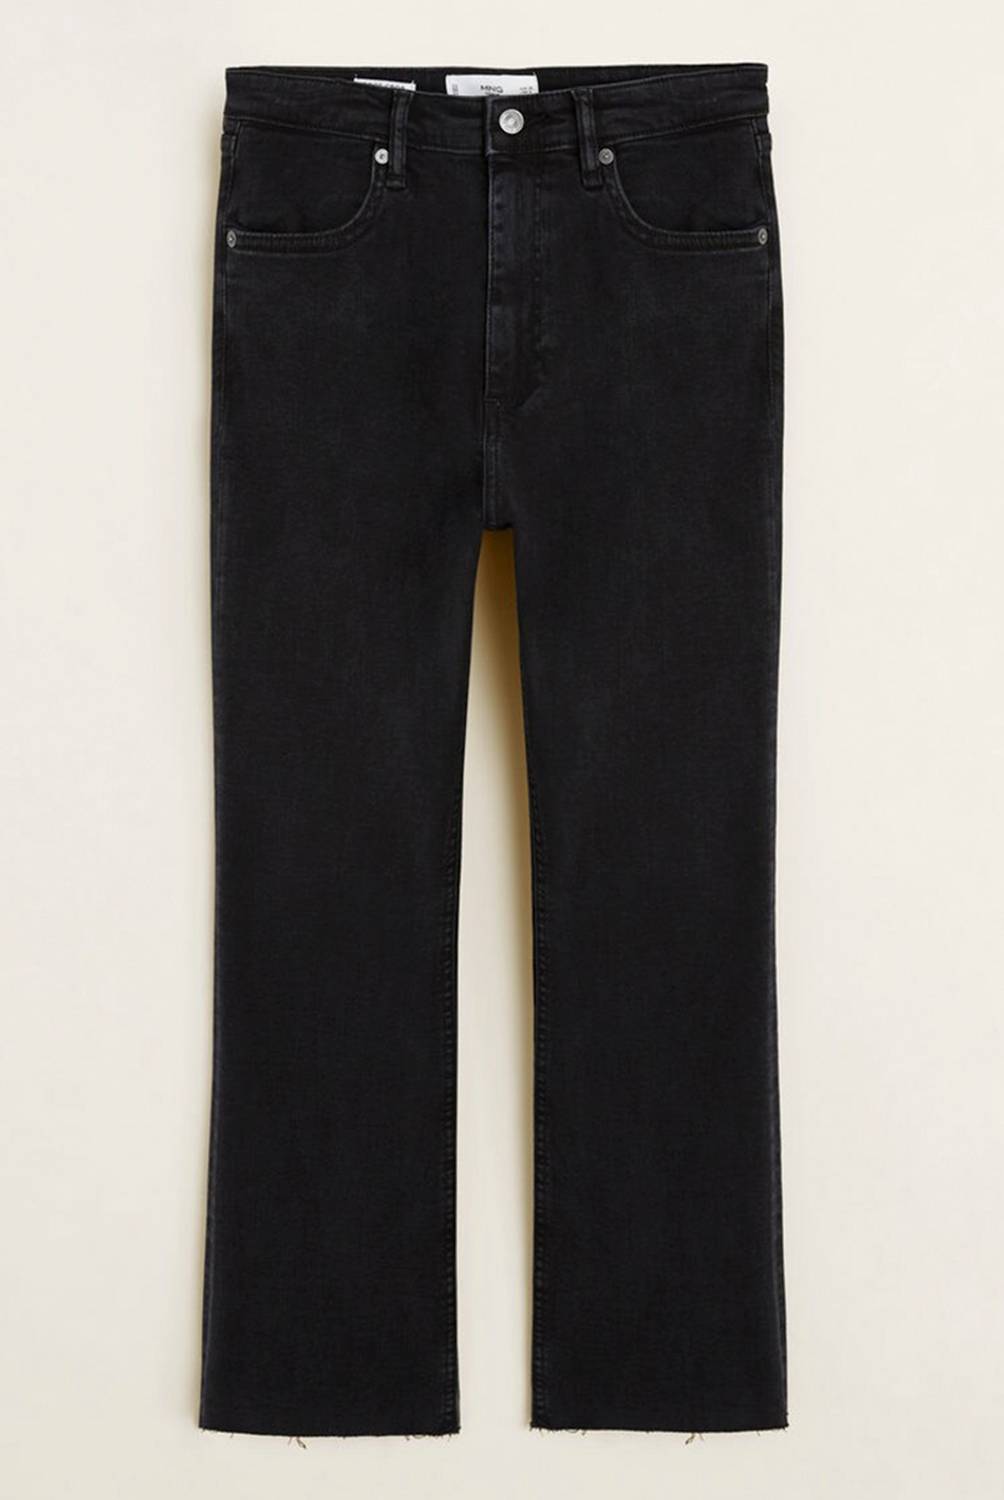 MANGO - Jeans de Algodón Mujer